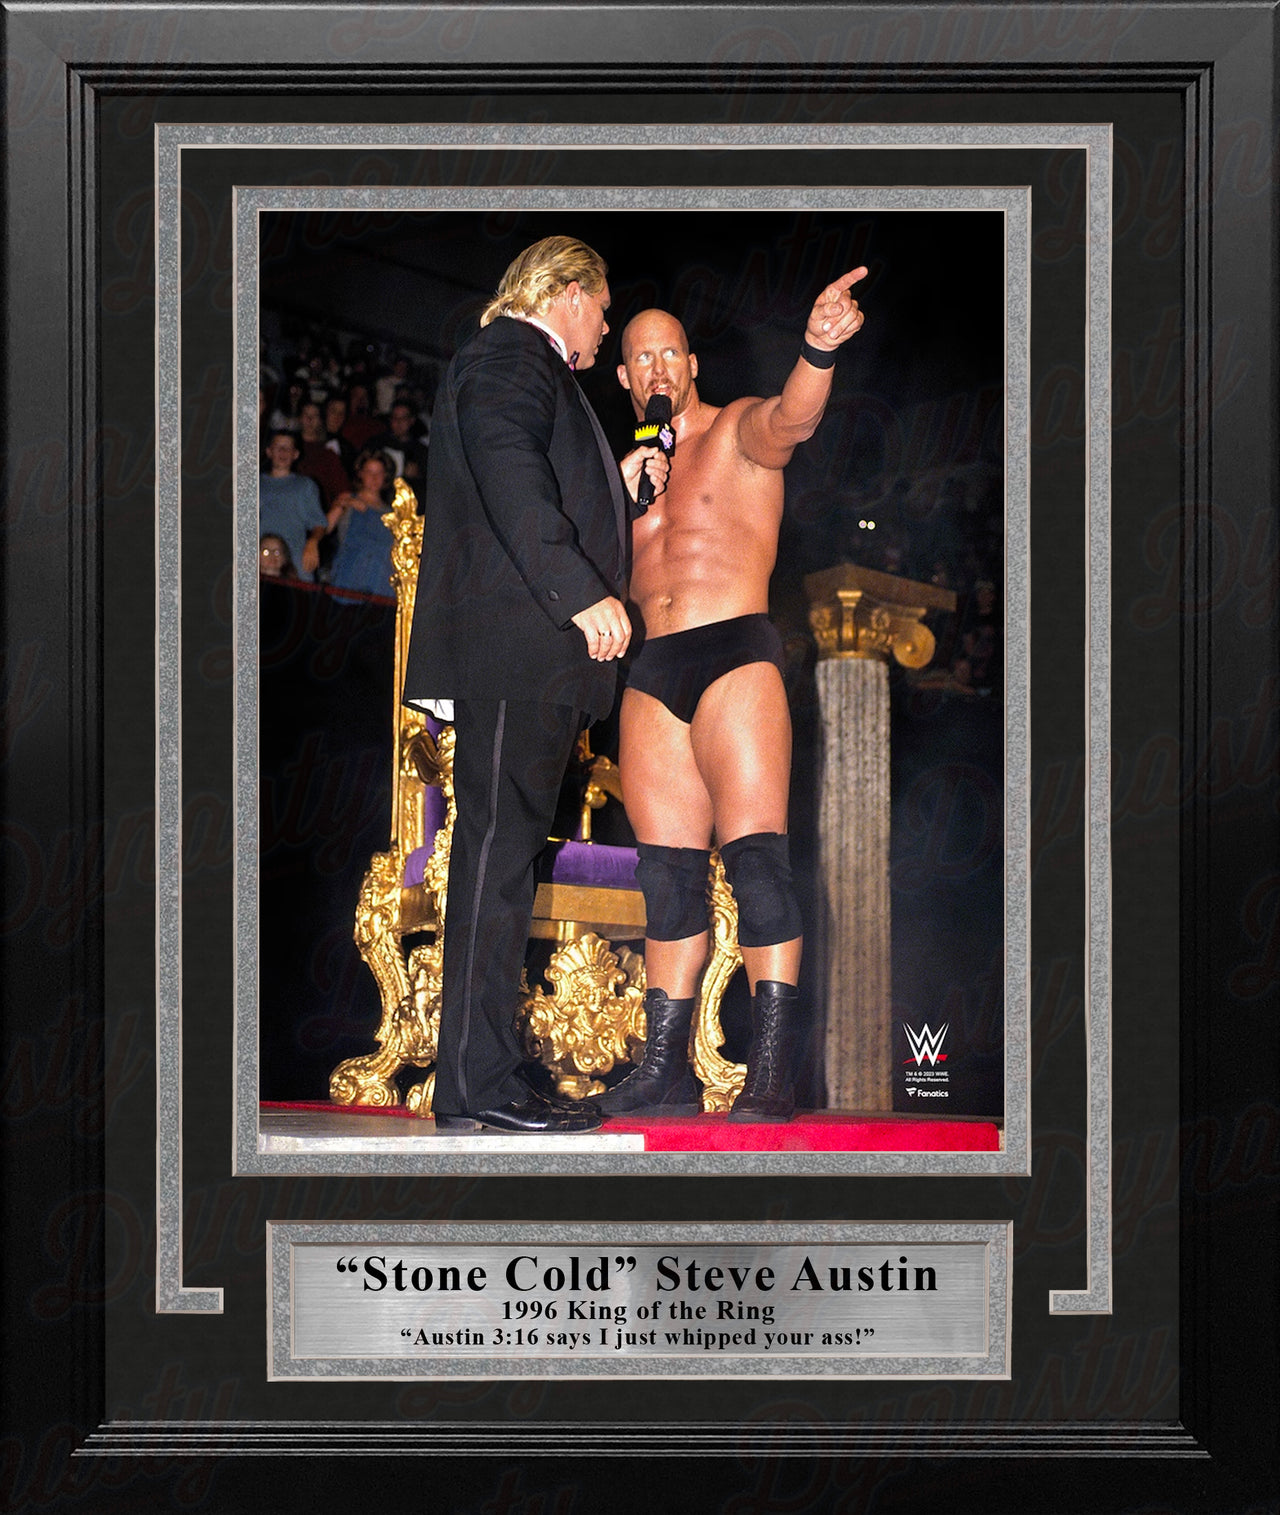 Stone Cold Steve Austin 1996 King of the Ring Austin 3:16 Speech 8" x 10" Framed WWE Wrestling Photo - Dynasty Sports & Framing 